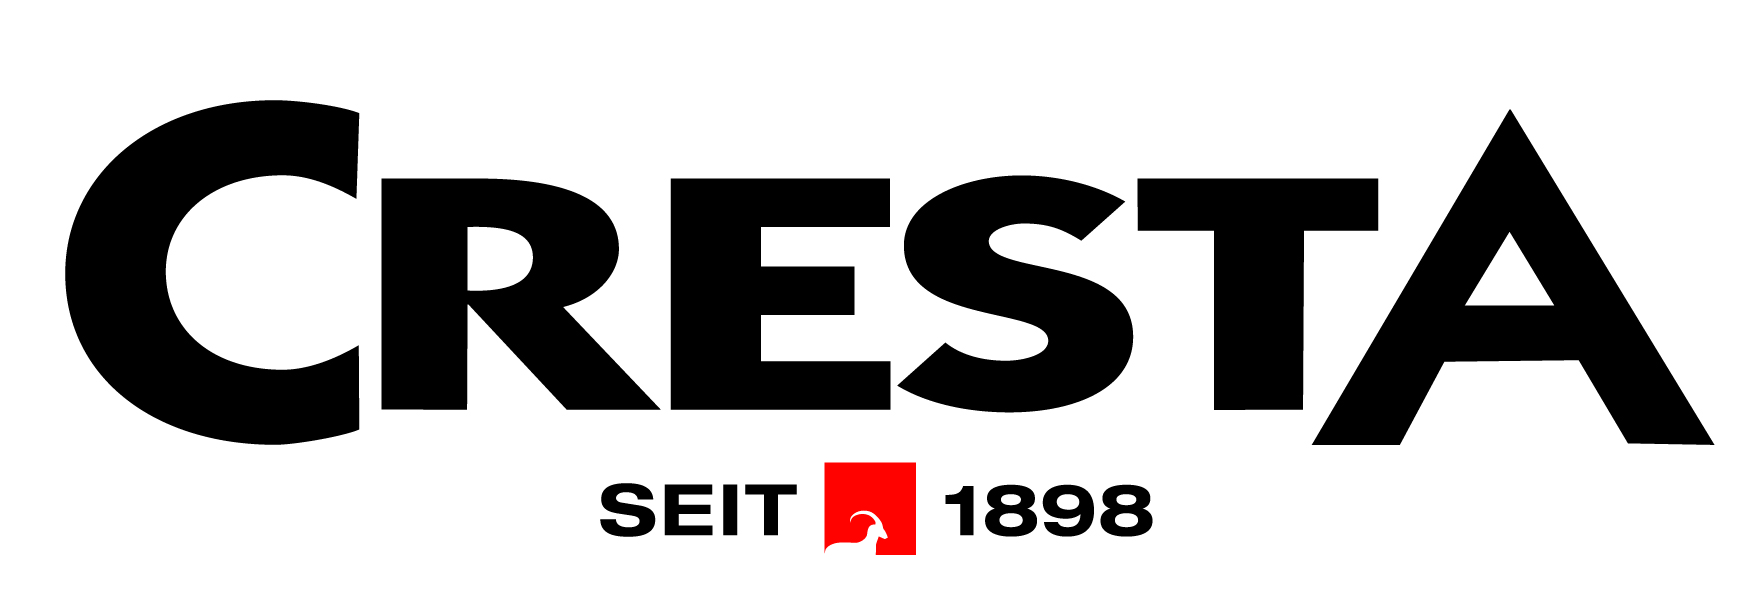 Cresta-Logo_2018_large